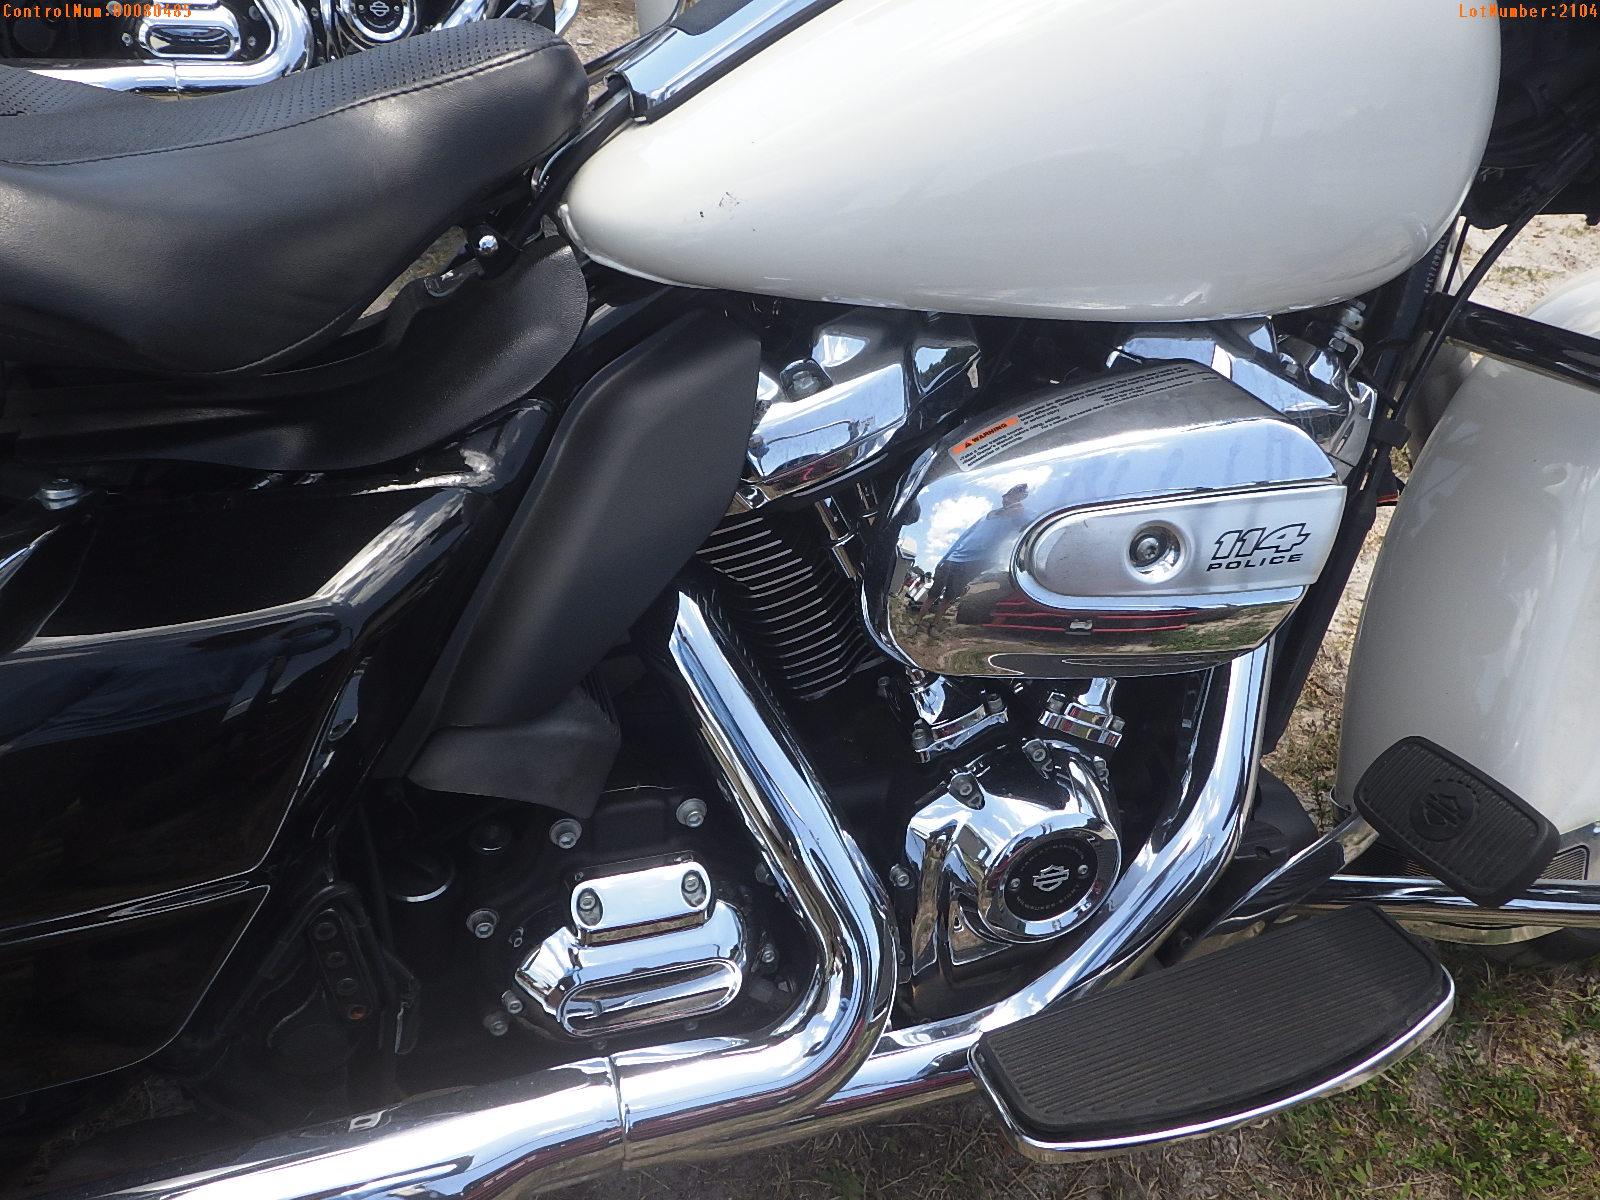 5-02104 (Cars-Motorcycle)  Seller: Gov-Hillsborough County Sheriffs 2021 HD FLHT